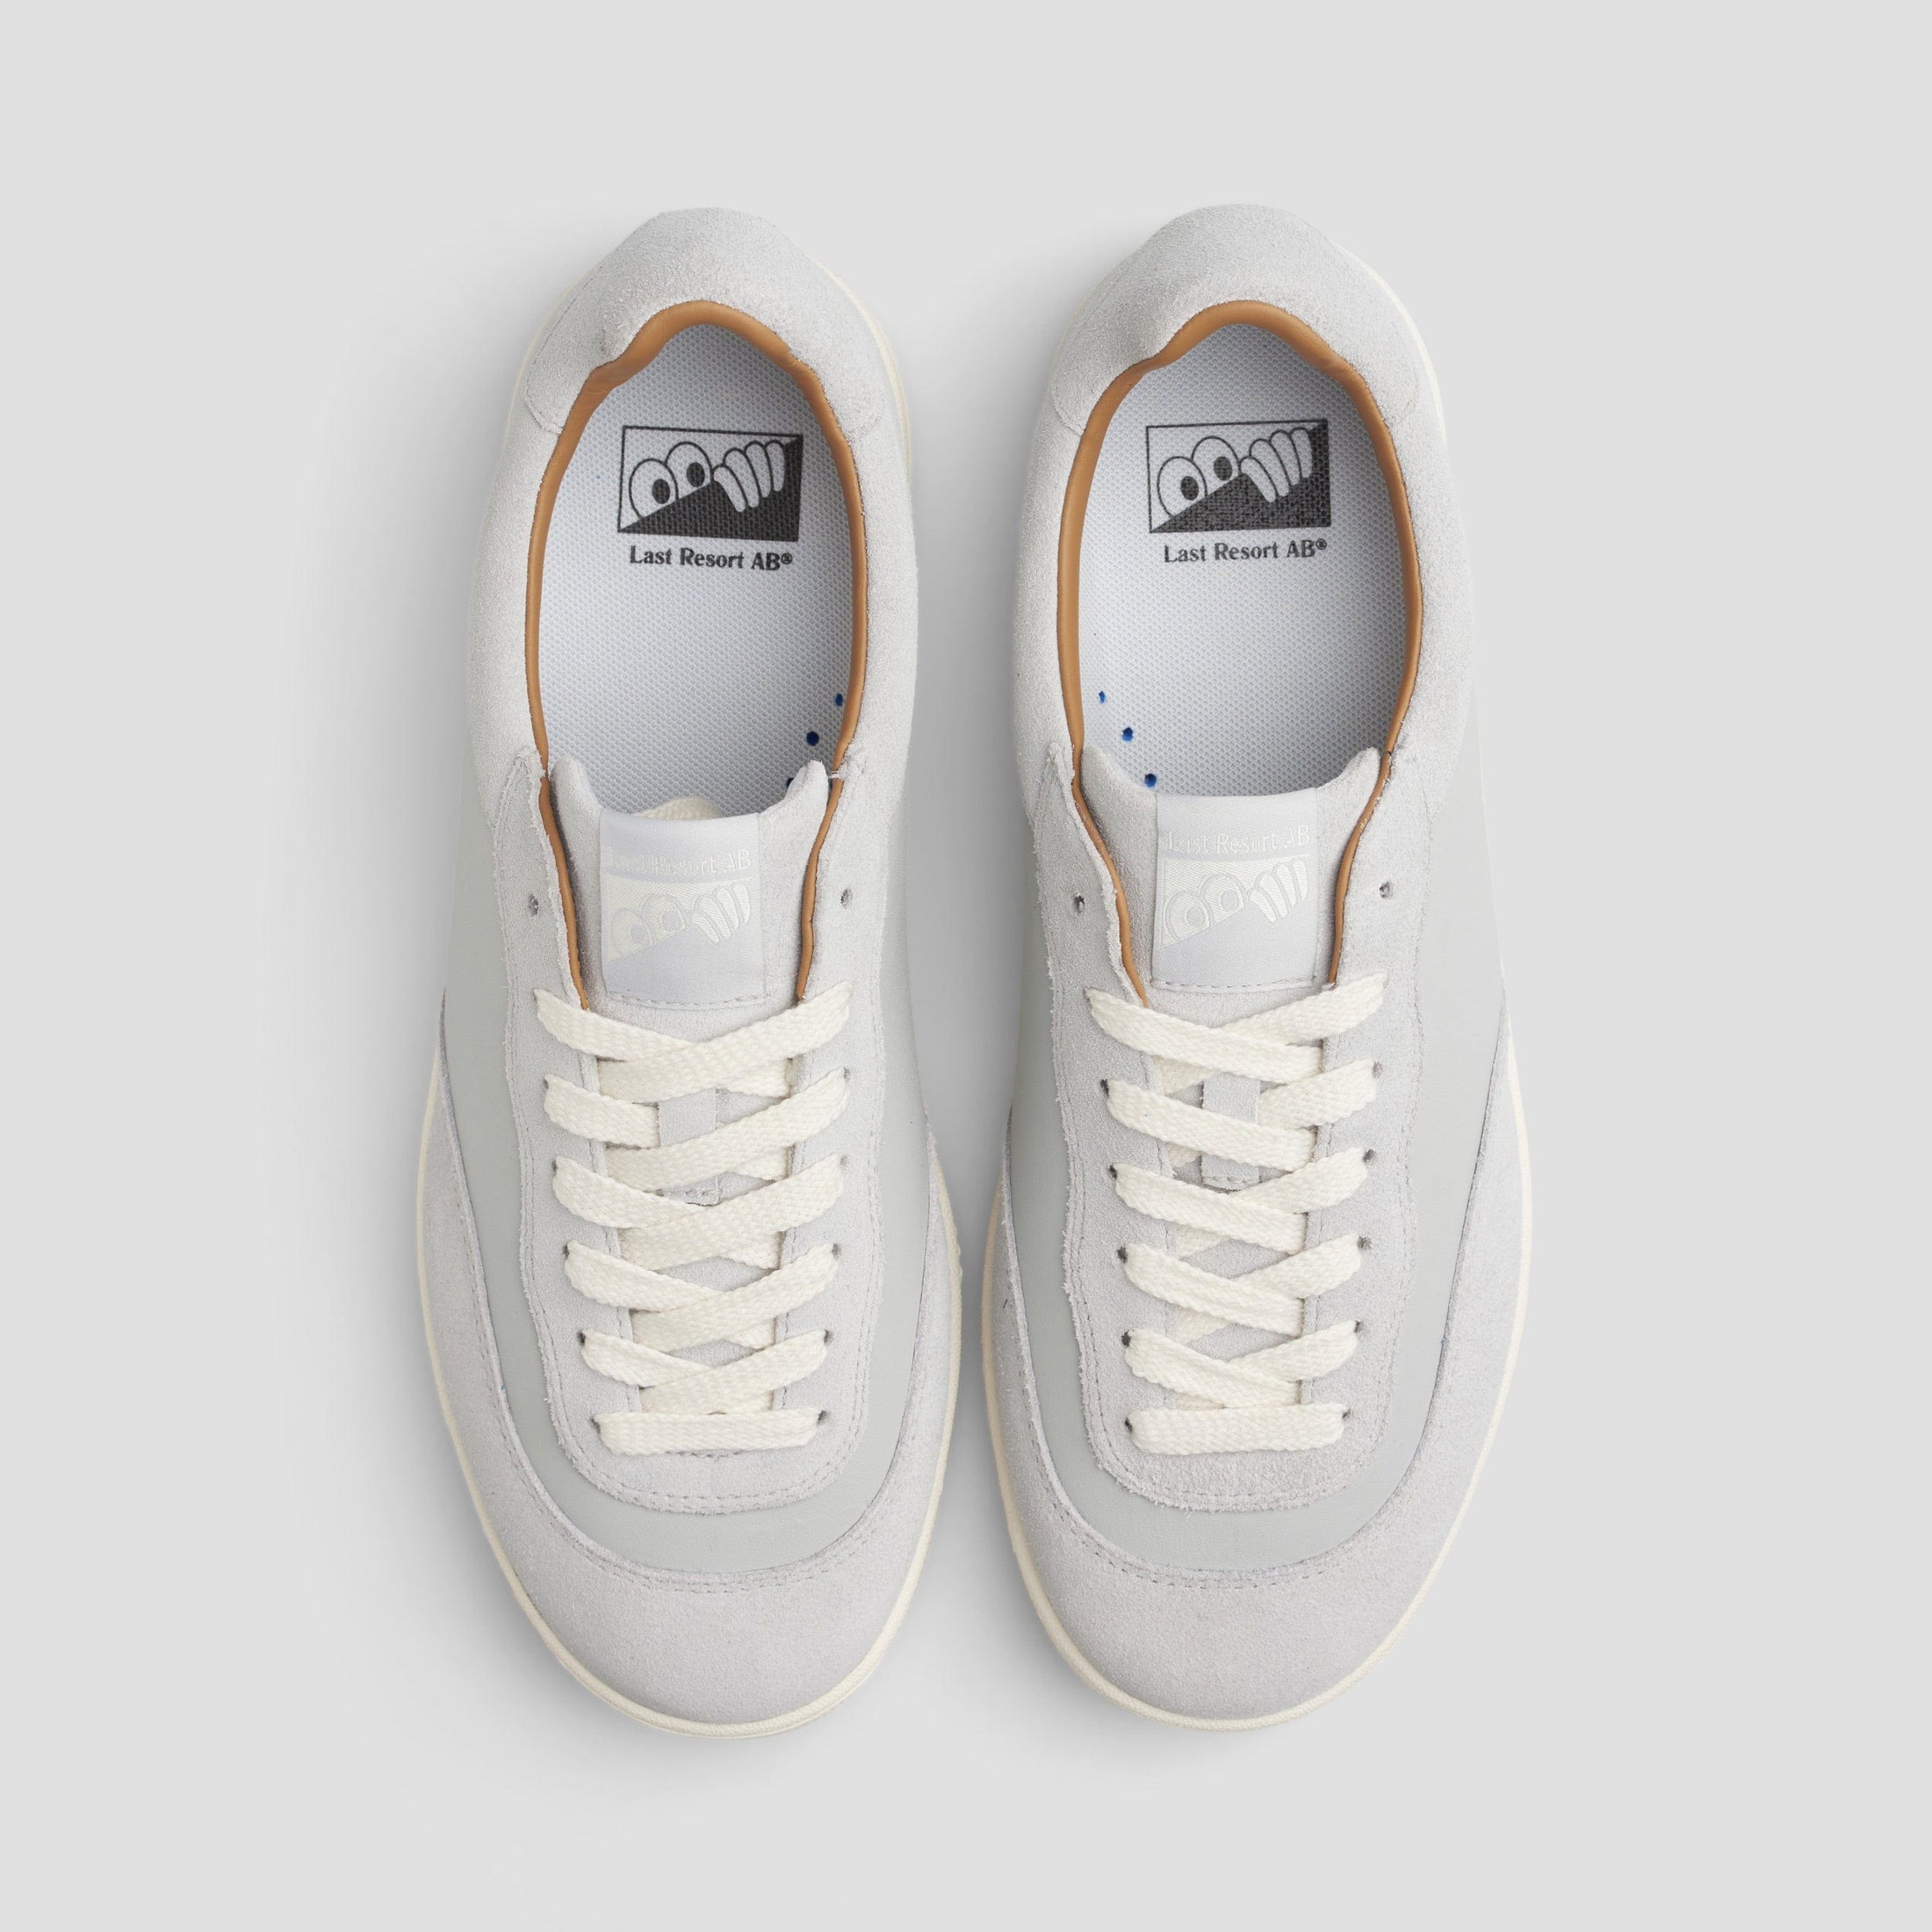 Last Resort AB CM001 LO Skate Shoes Light Grey / White